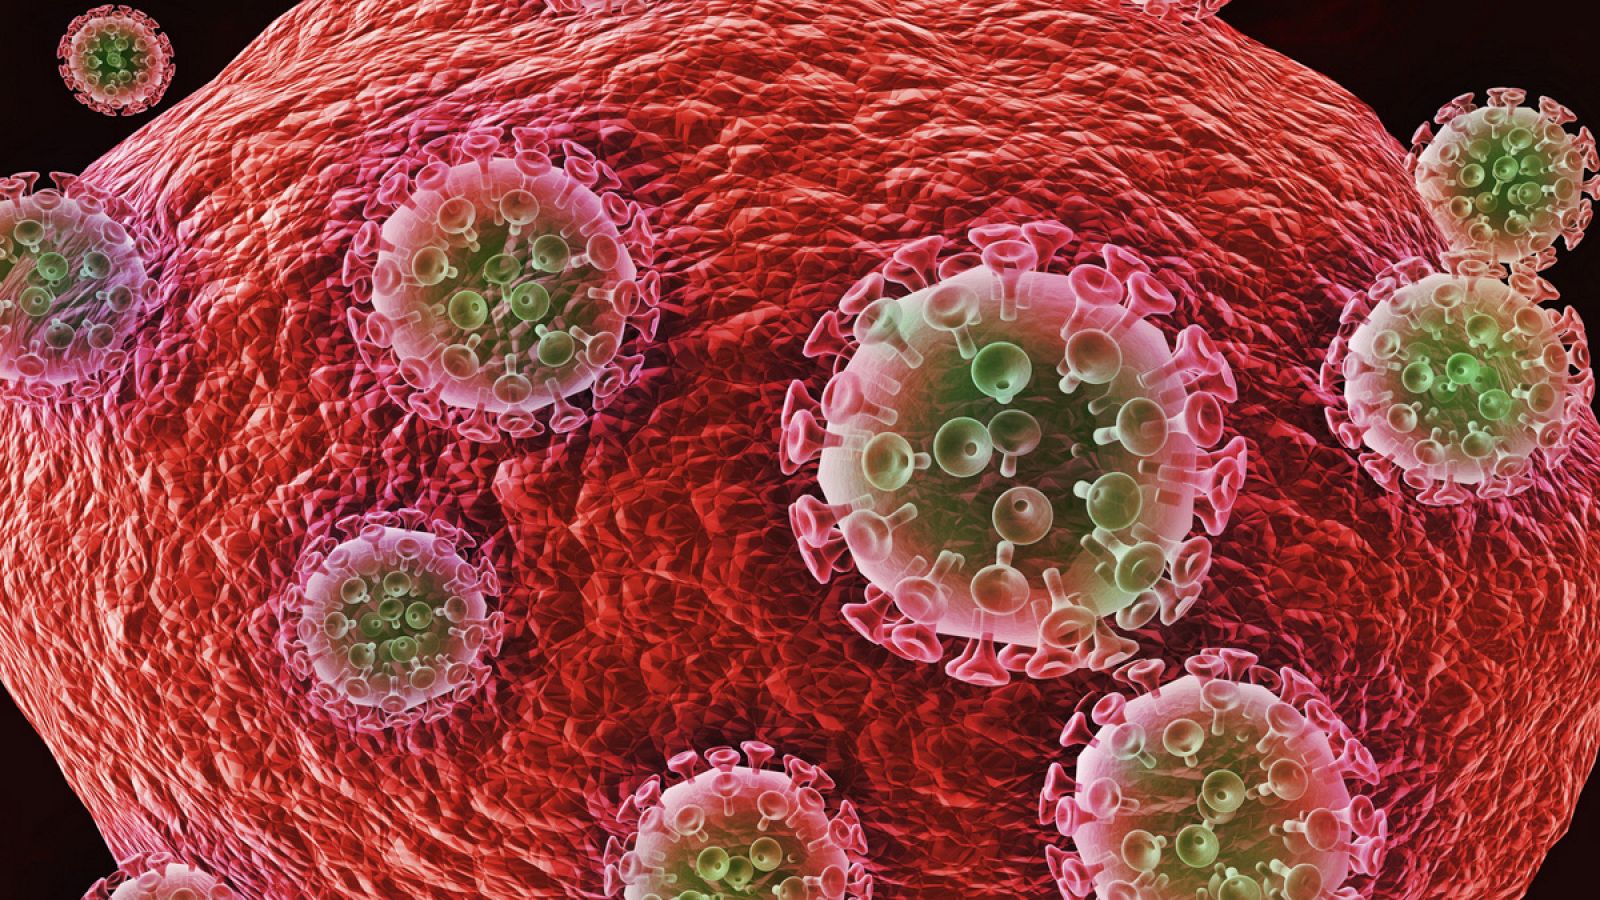 Representación de virus de la inmunodeficiencia humana atacando a una célula sana.